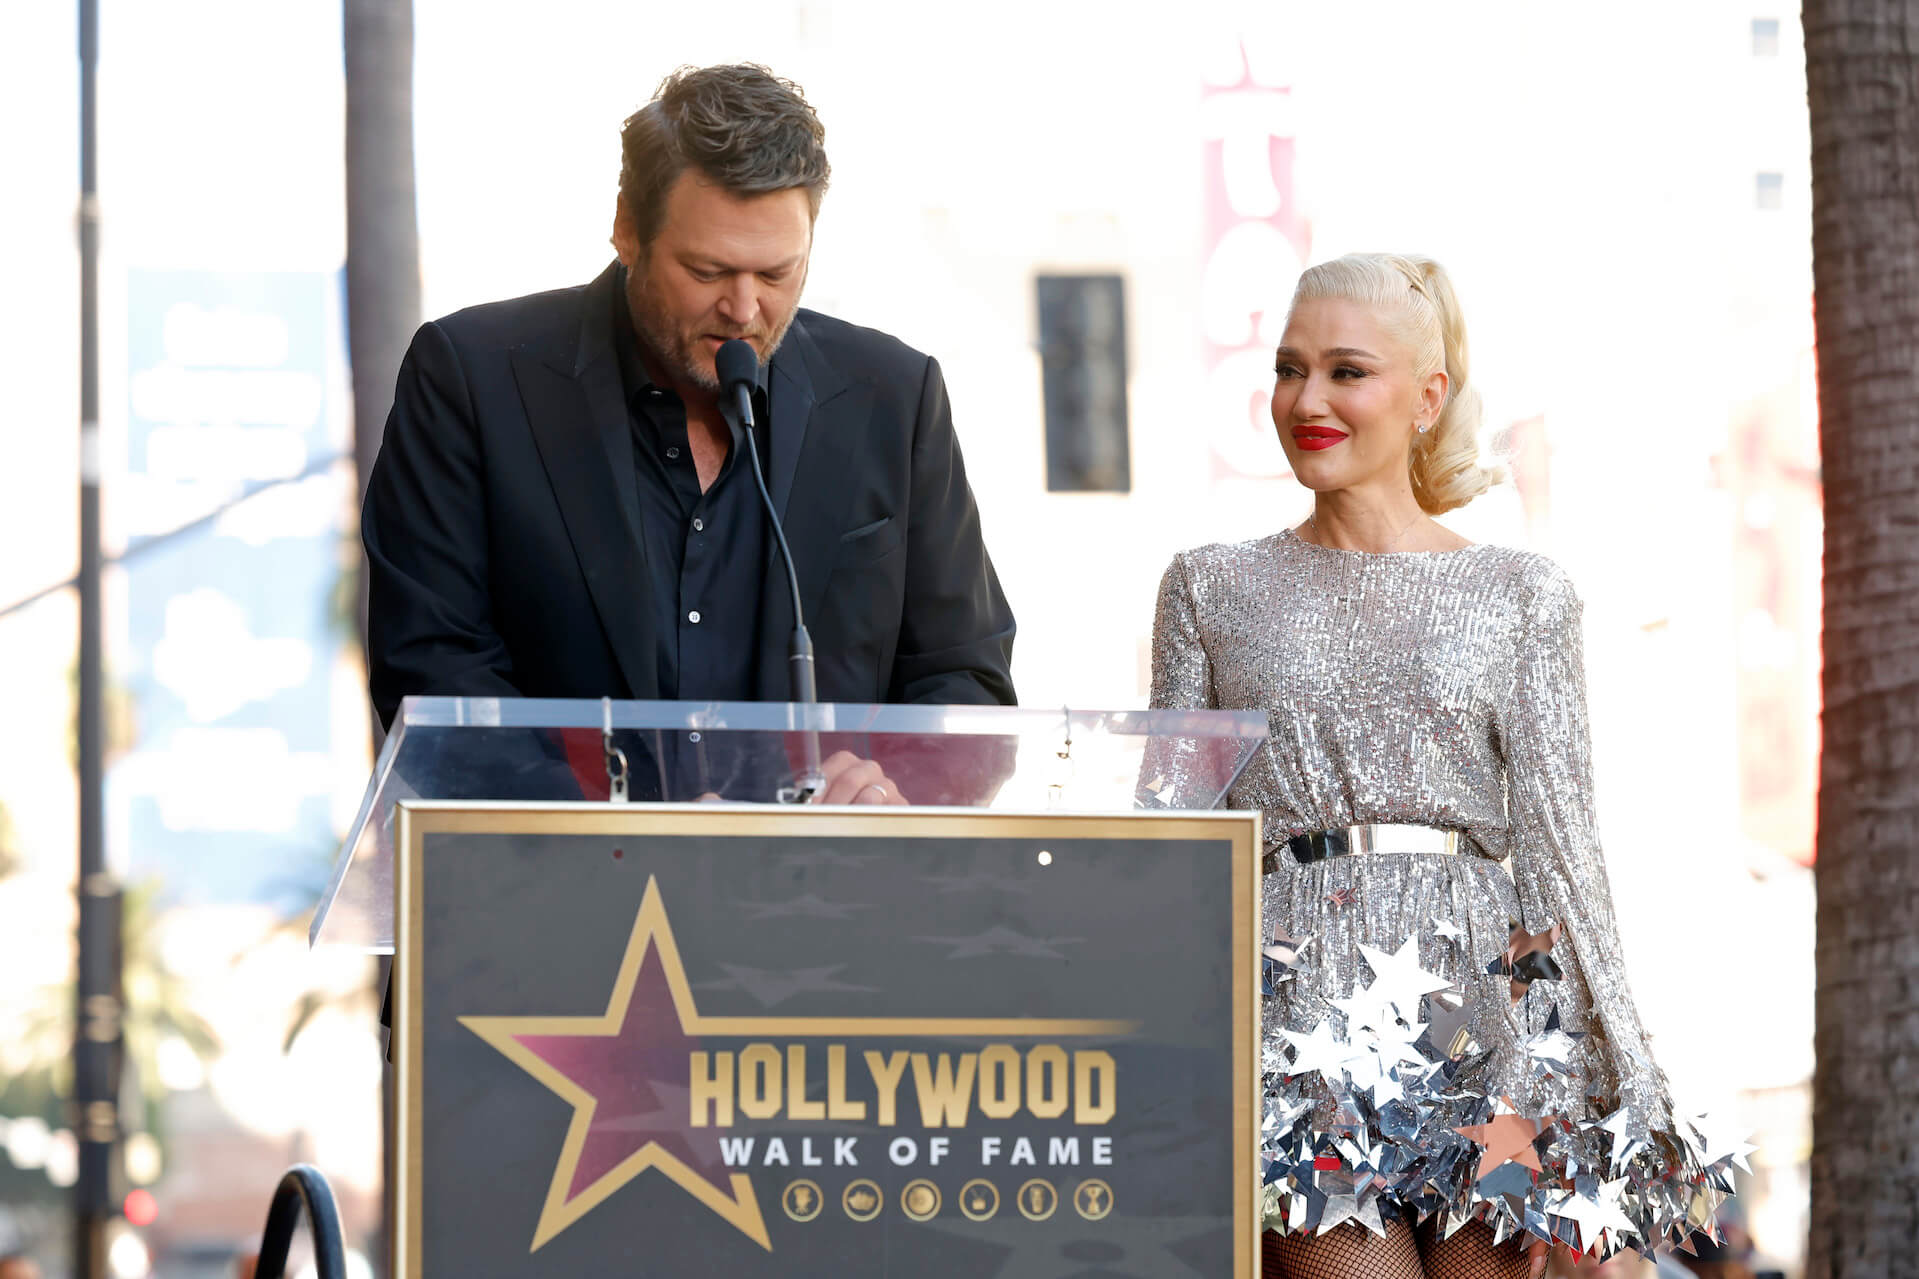 Blake Shelton speaking about 'The Voice' Season 24 coach Gwen Stefani at the Hollywood Walk of Fame